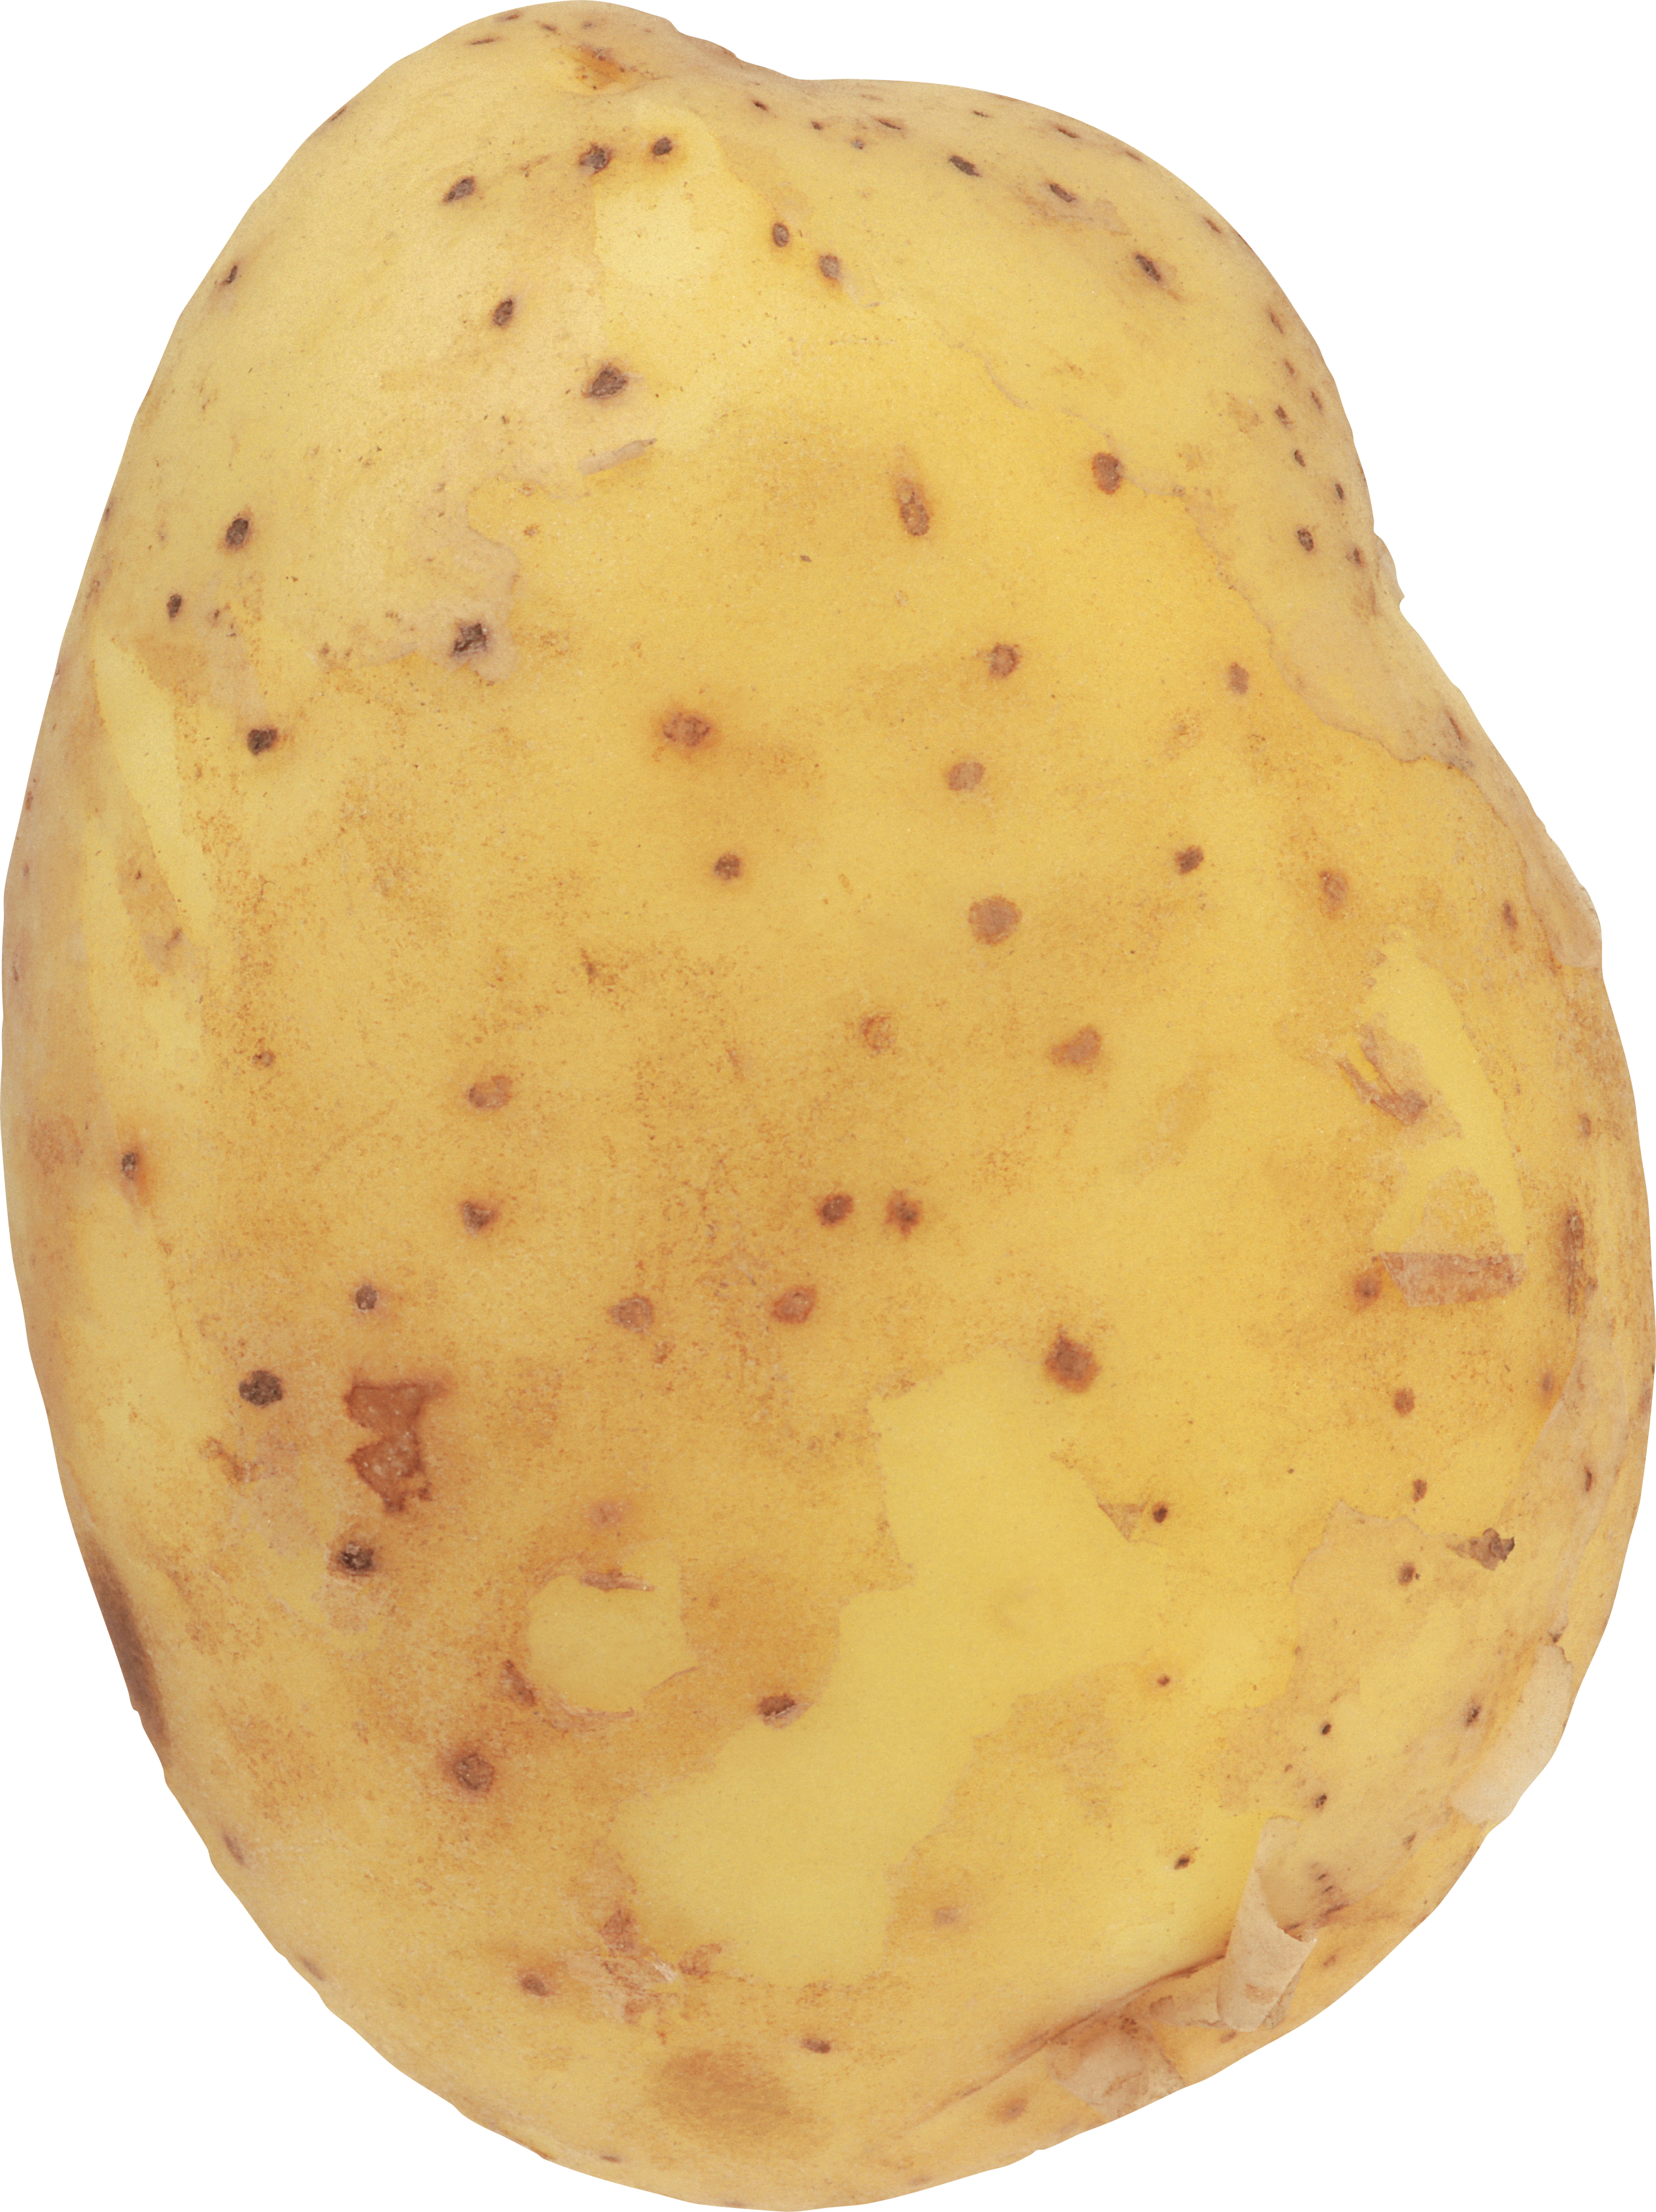 potato clipart one potato two